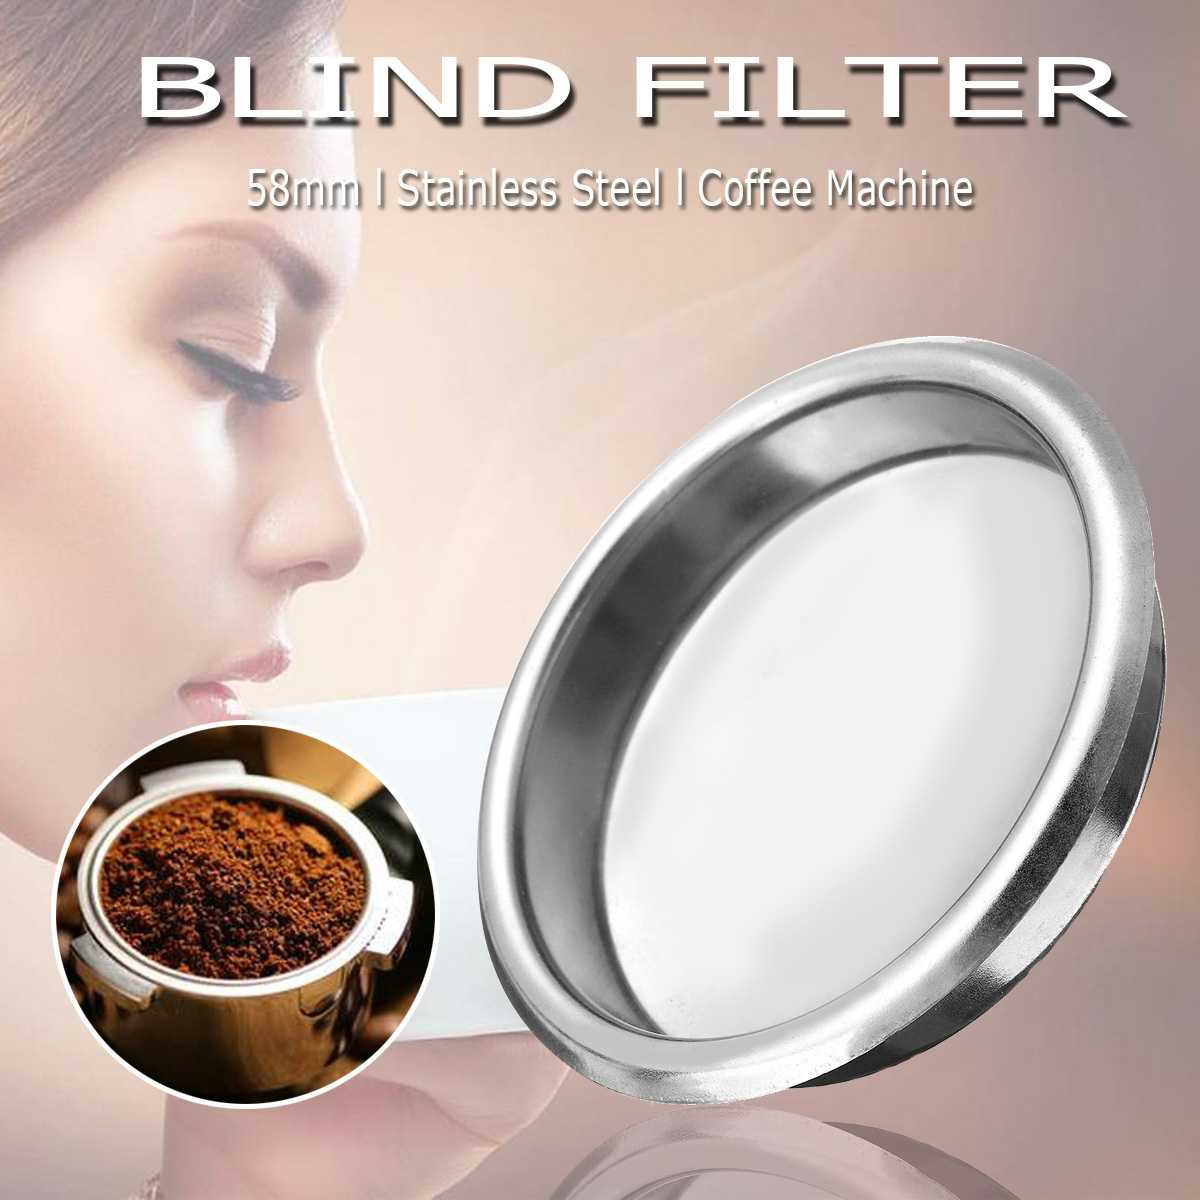 58mm Stainless Steel Blind Filter Espresso Coffee Machine Maker Backflush Flush Basket 10